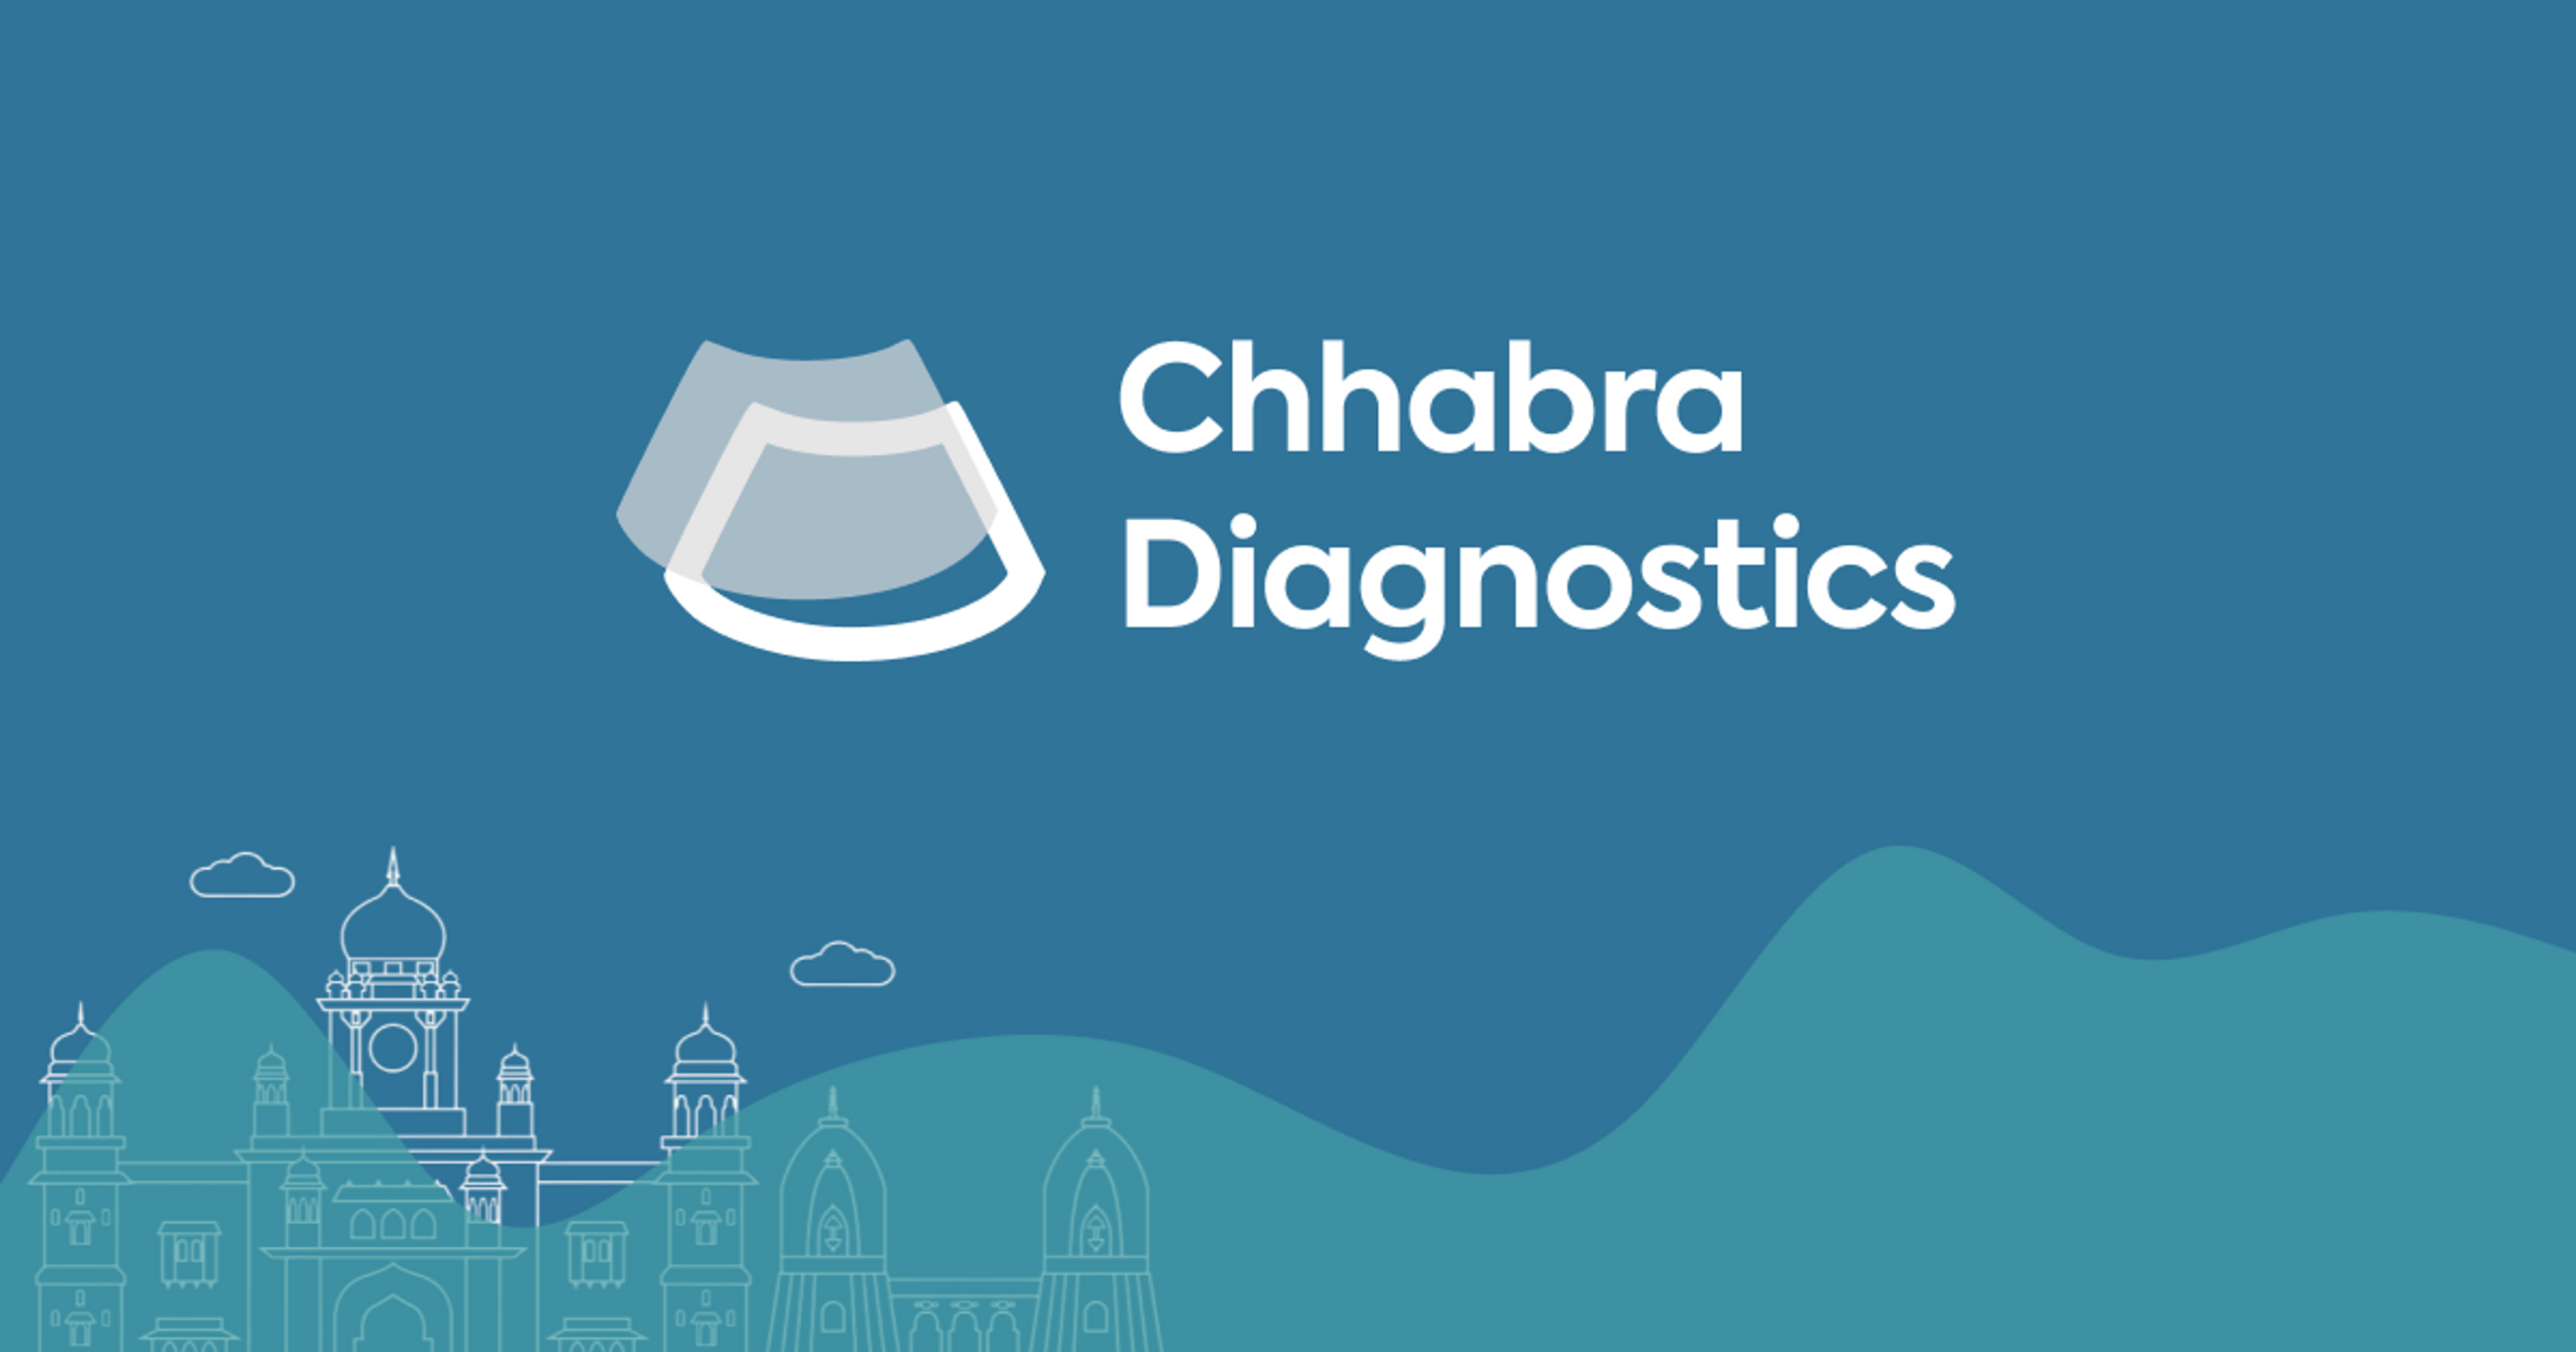 Chhabra Diagnostics